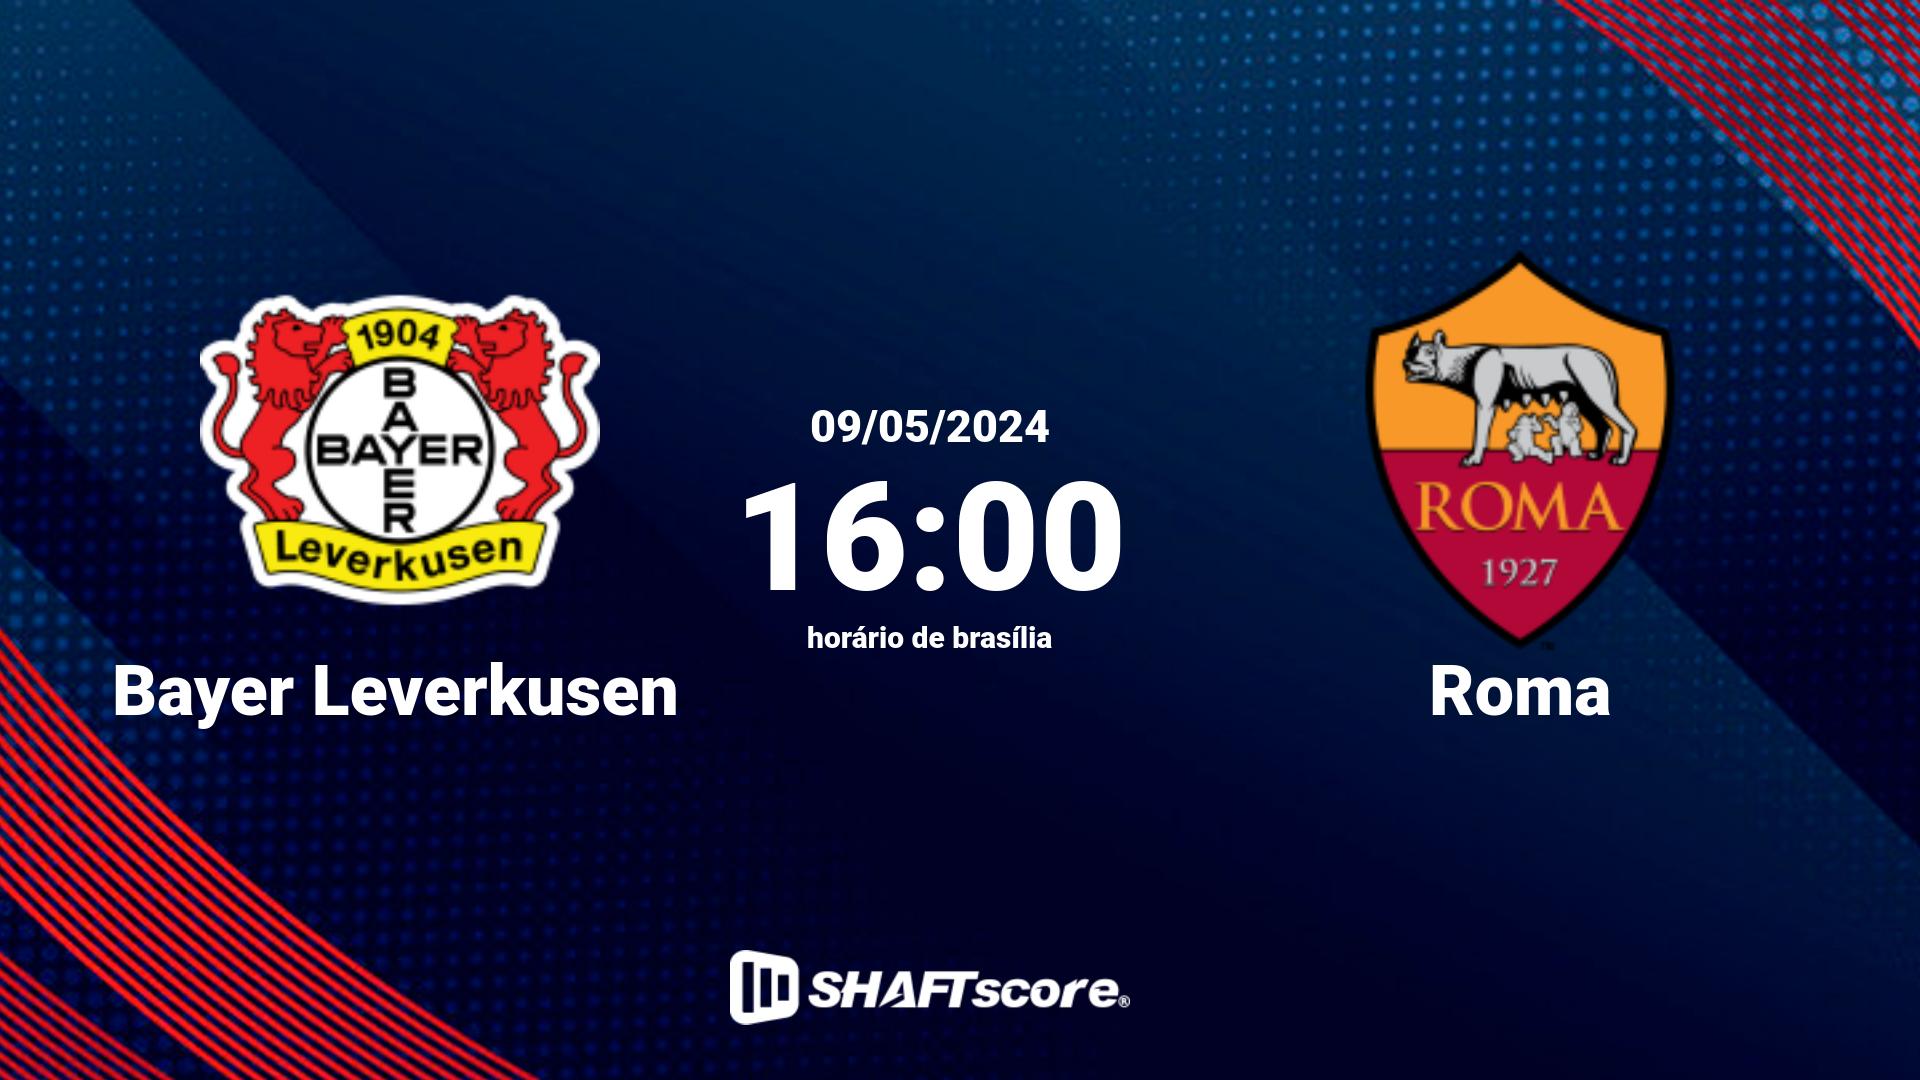 Estatísticas do jogo Bayer Leverkusen vs Roma 09.05 16:00